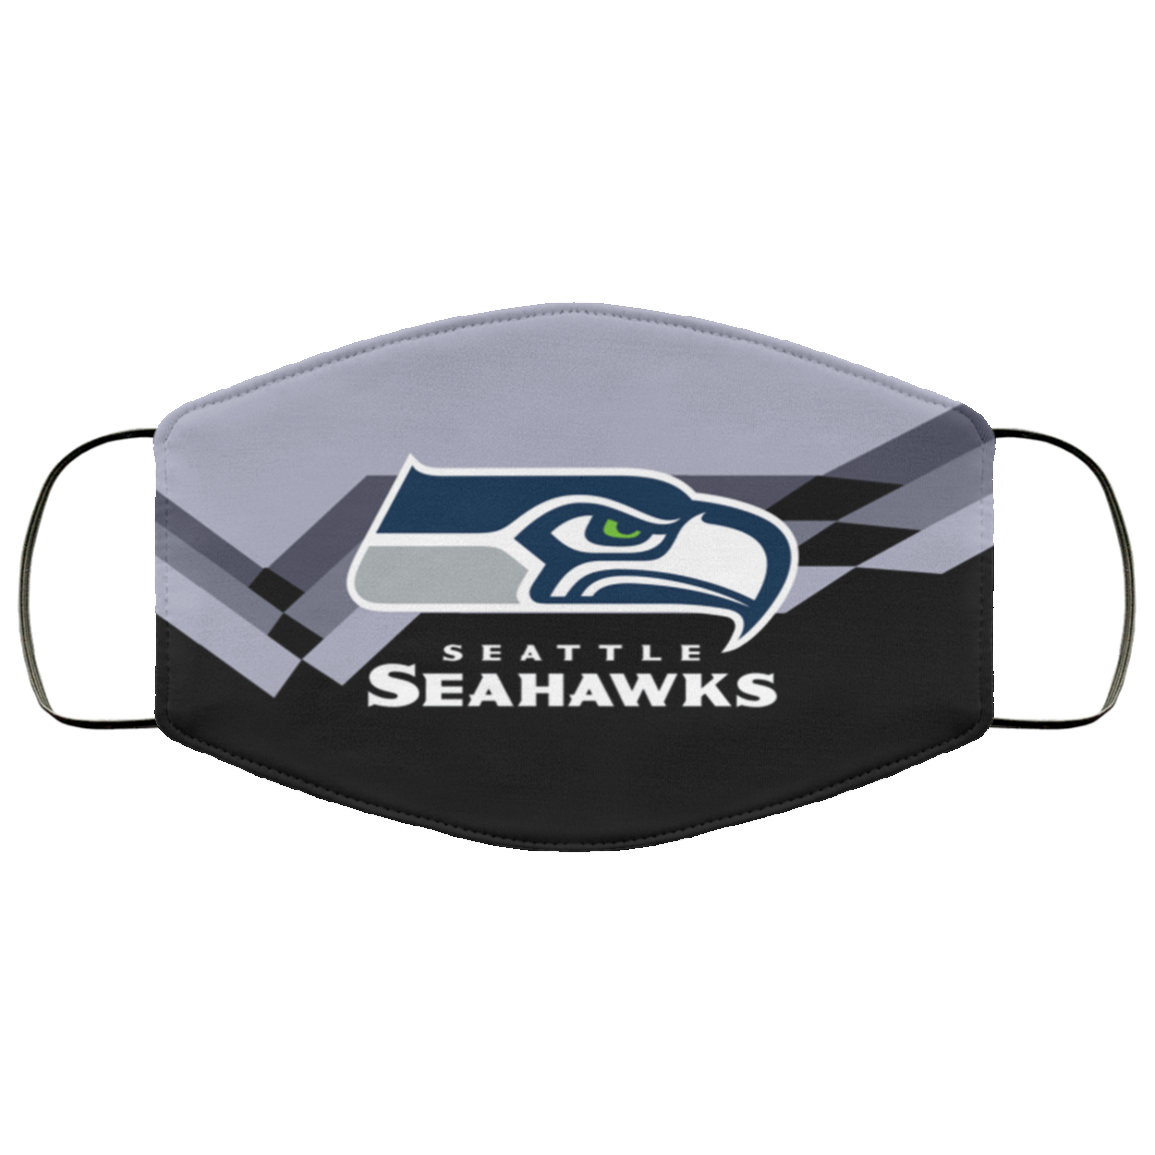 Seattle seahawks face mask